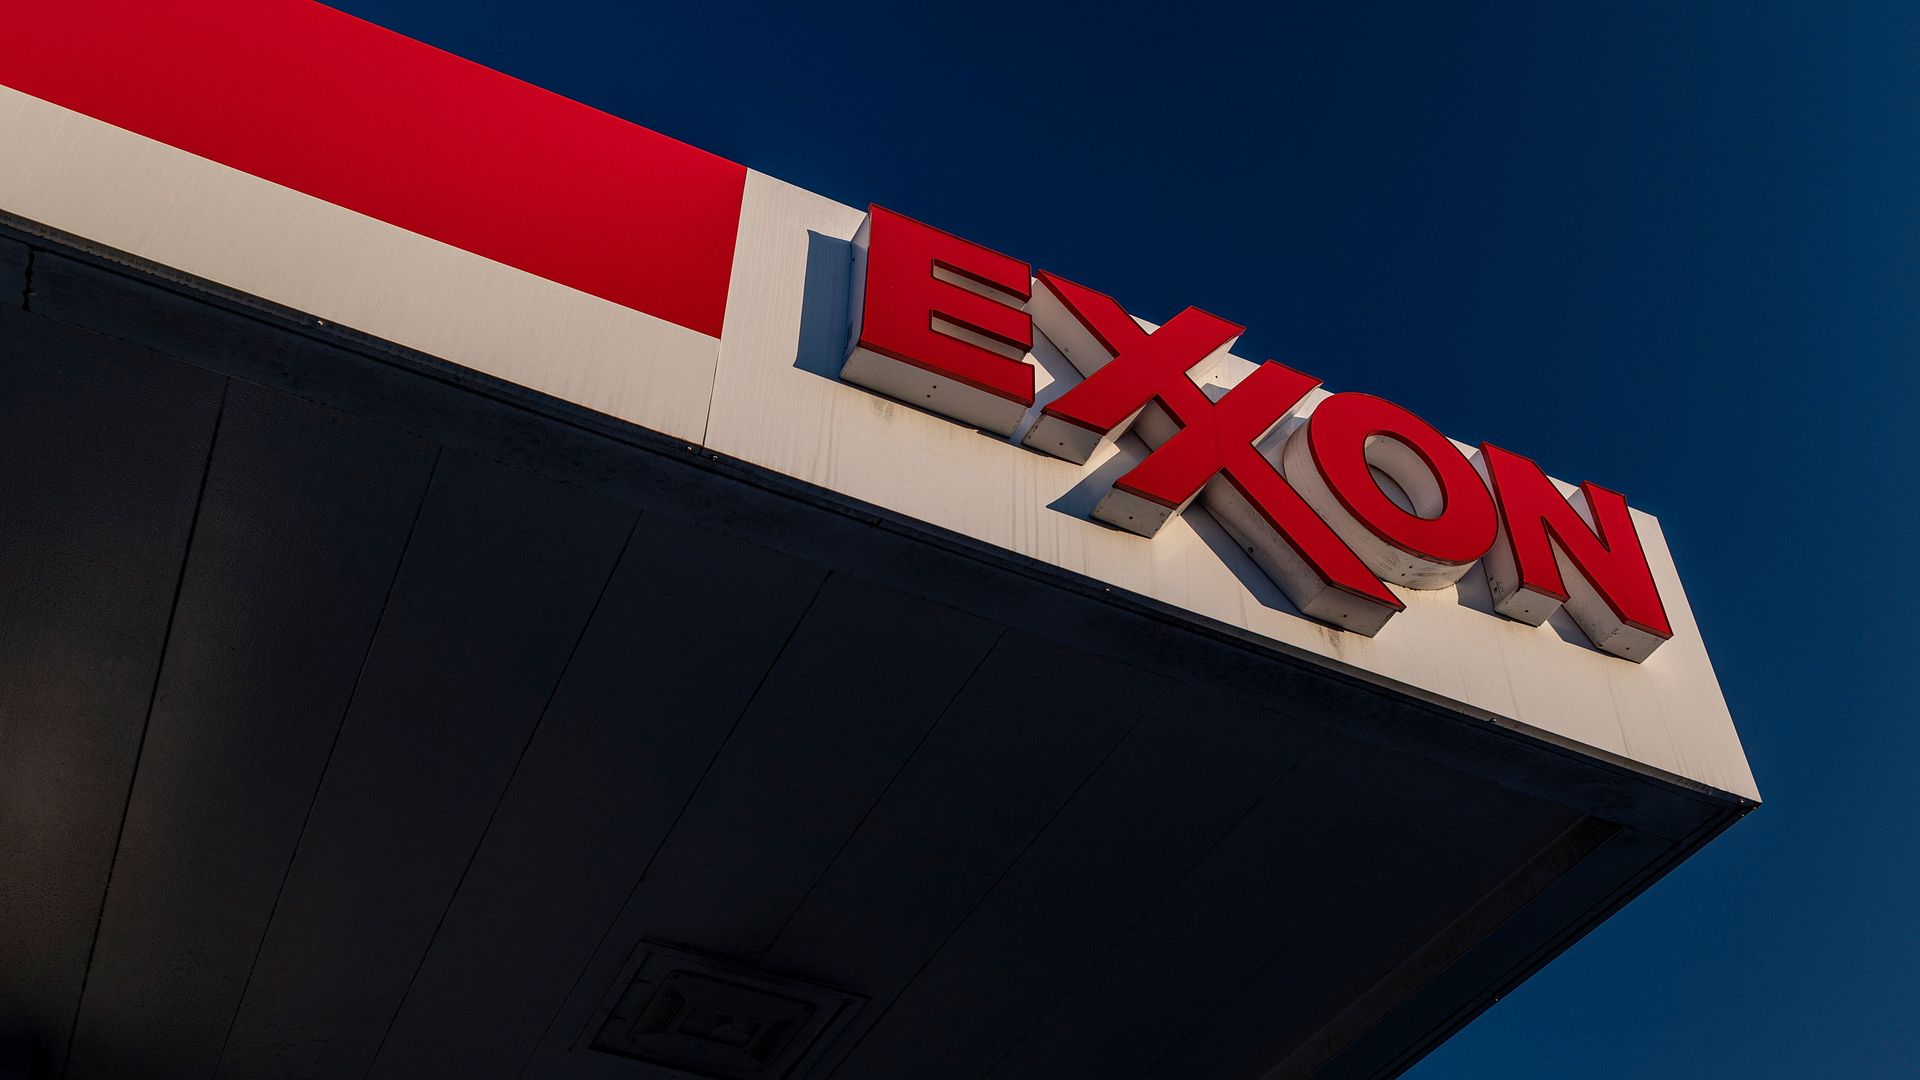 Signage at an Exxon Mobil gas station in El Cerrito, California